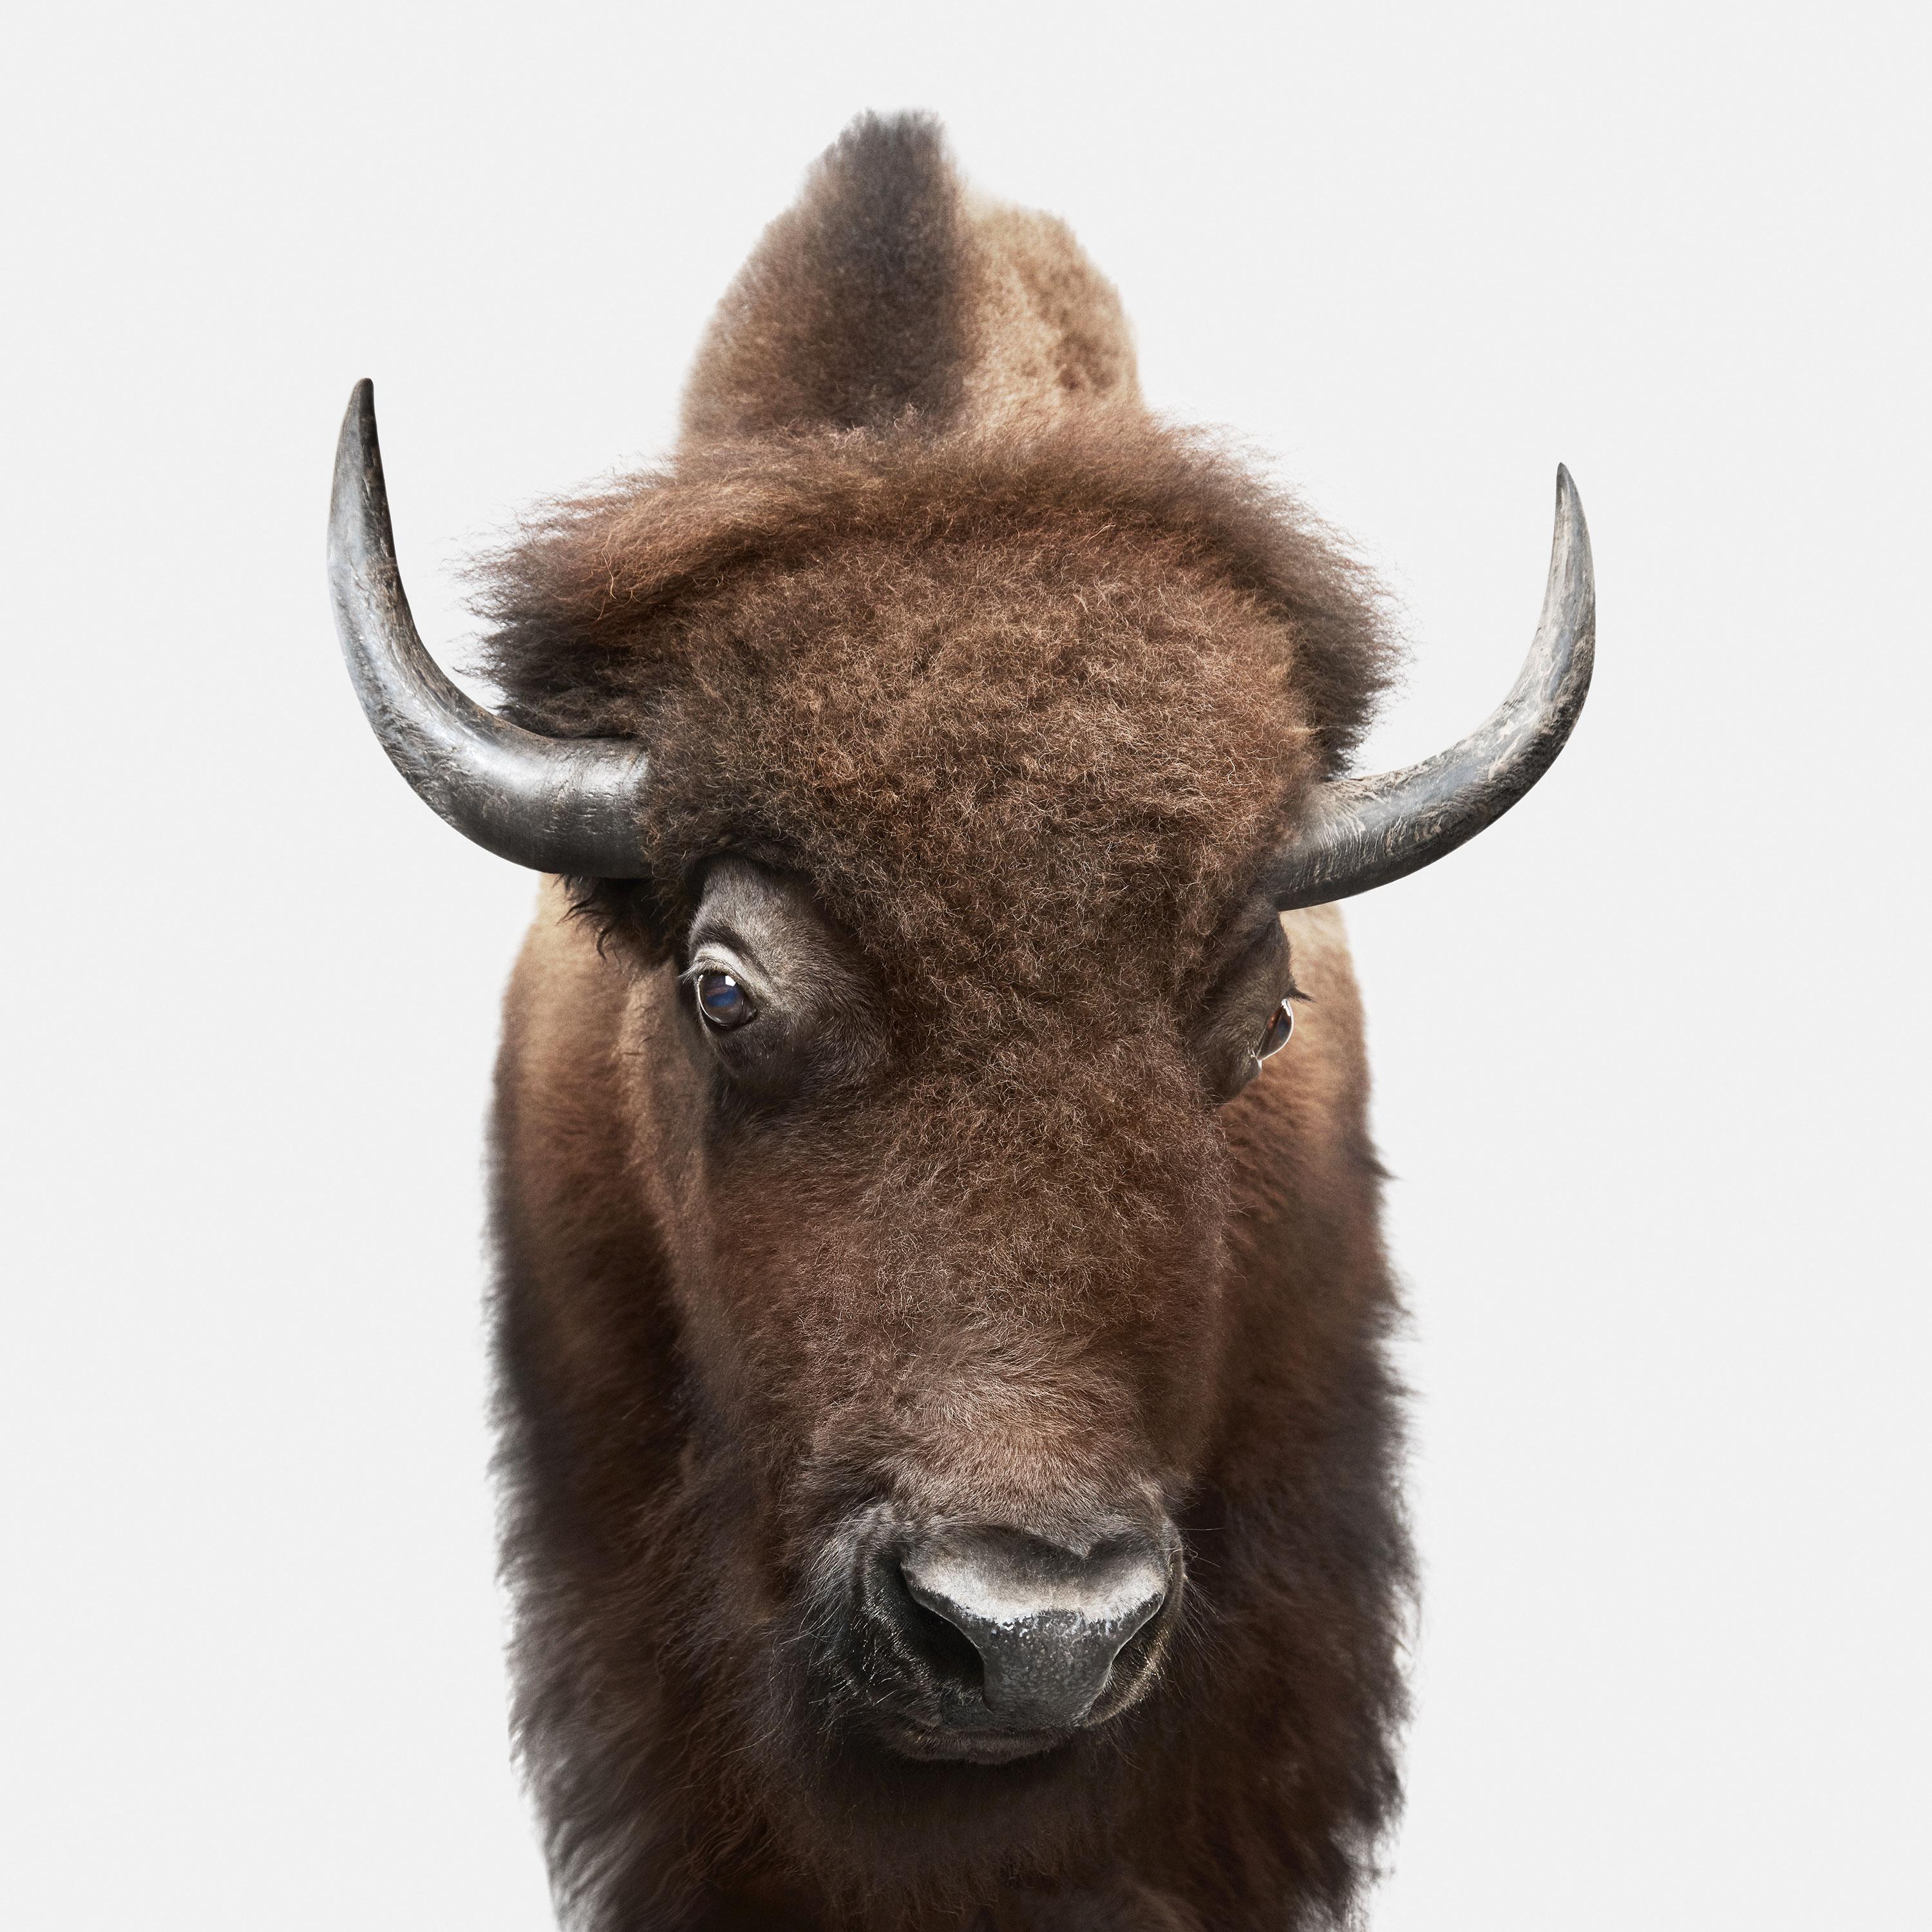 Randal Ford Color Photograph - American Buffalo (48" x 48")